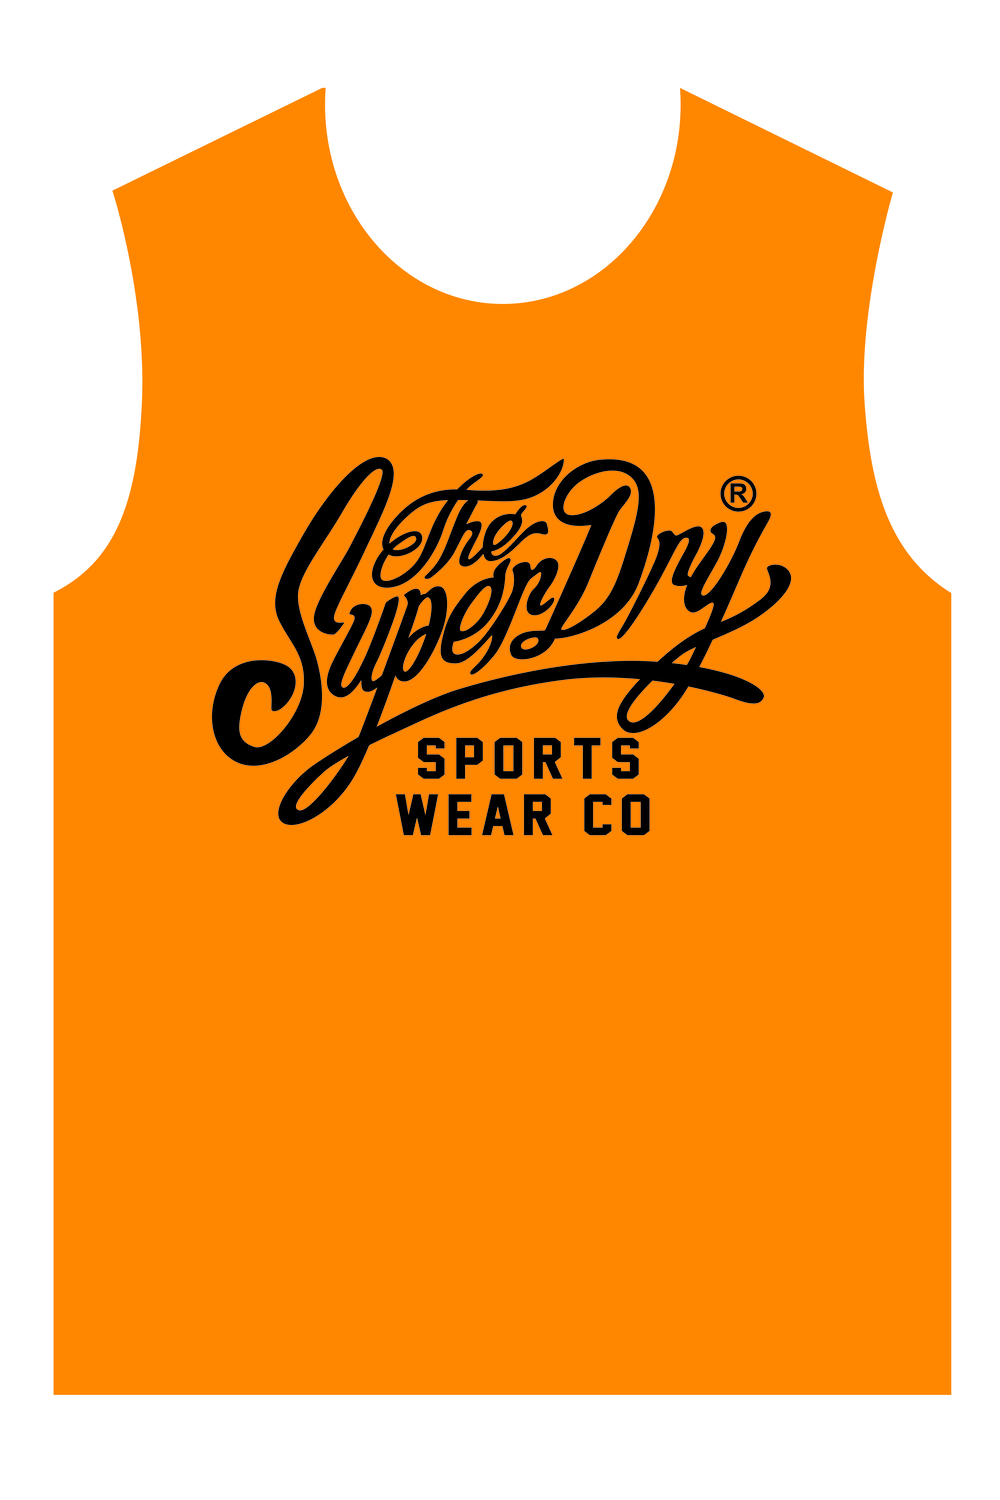 Super Day T-shirt! Bold design pinterest preview image.